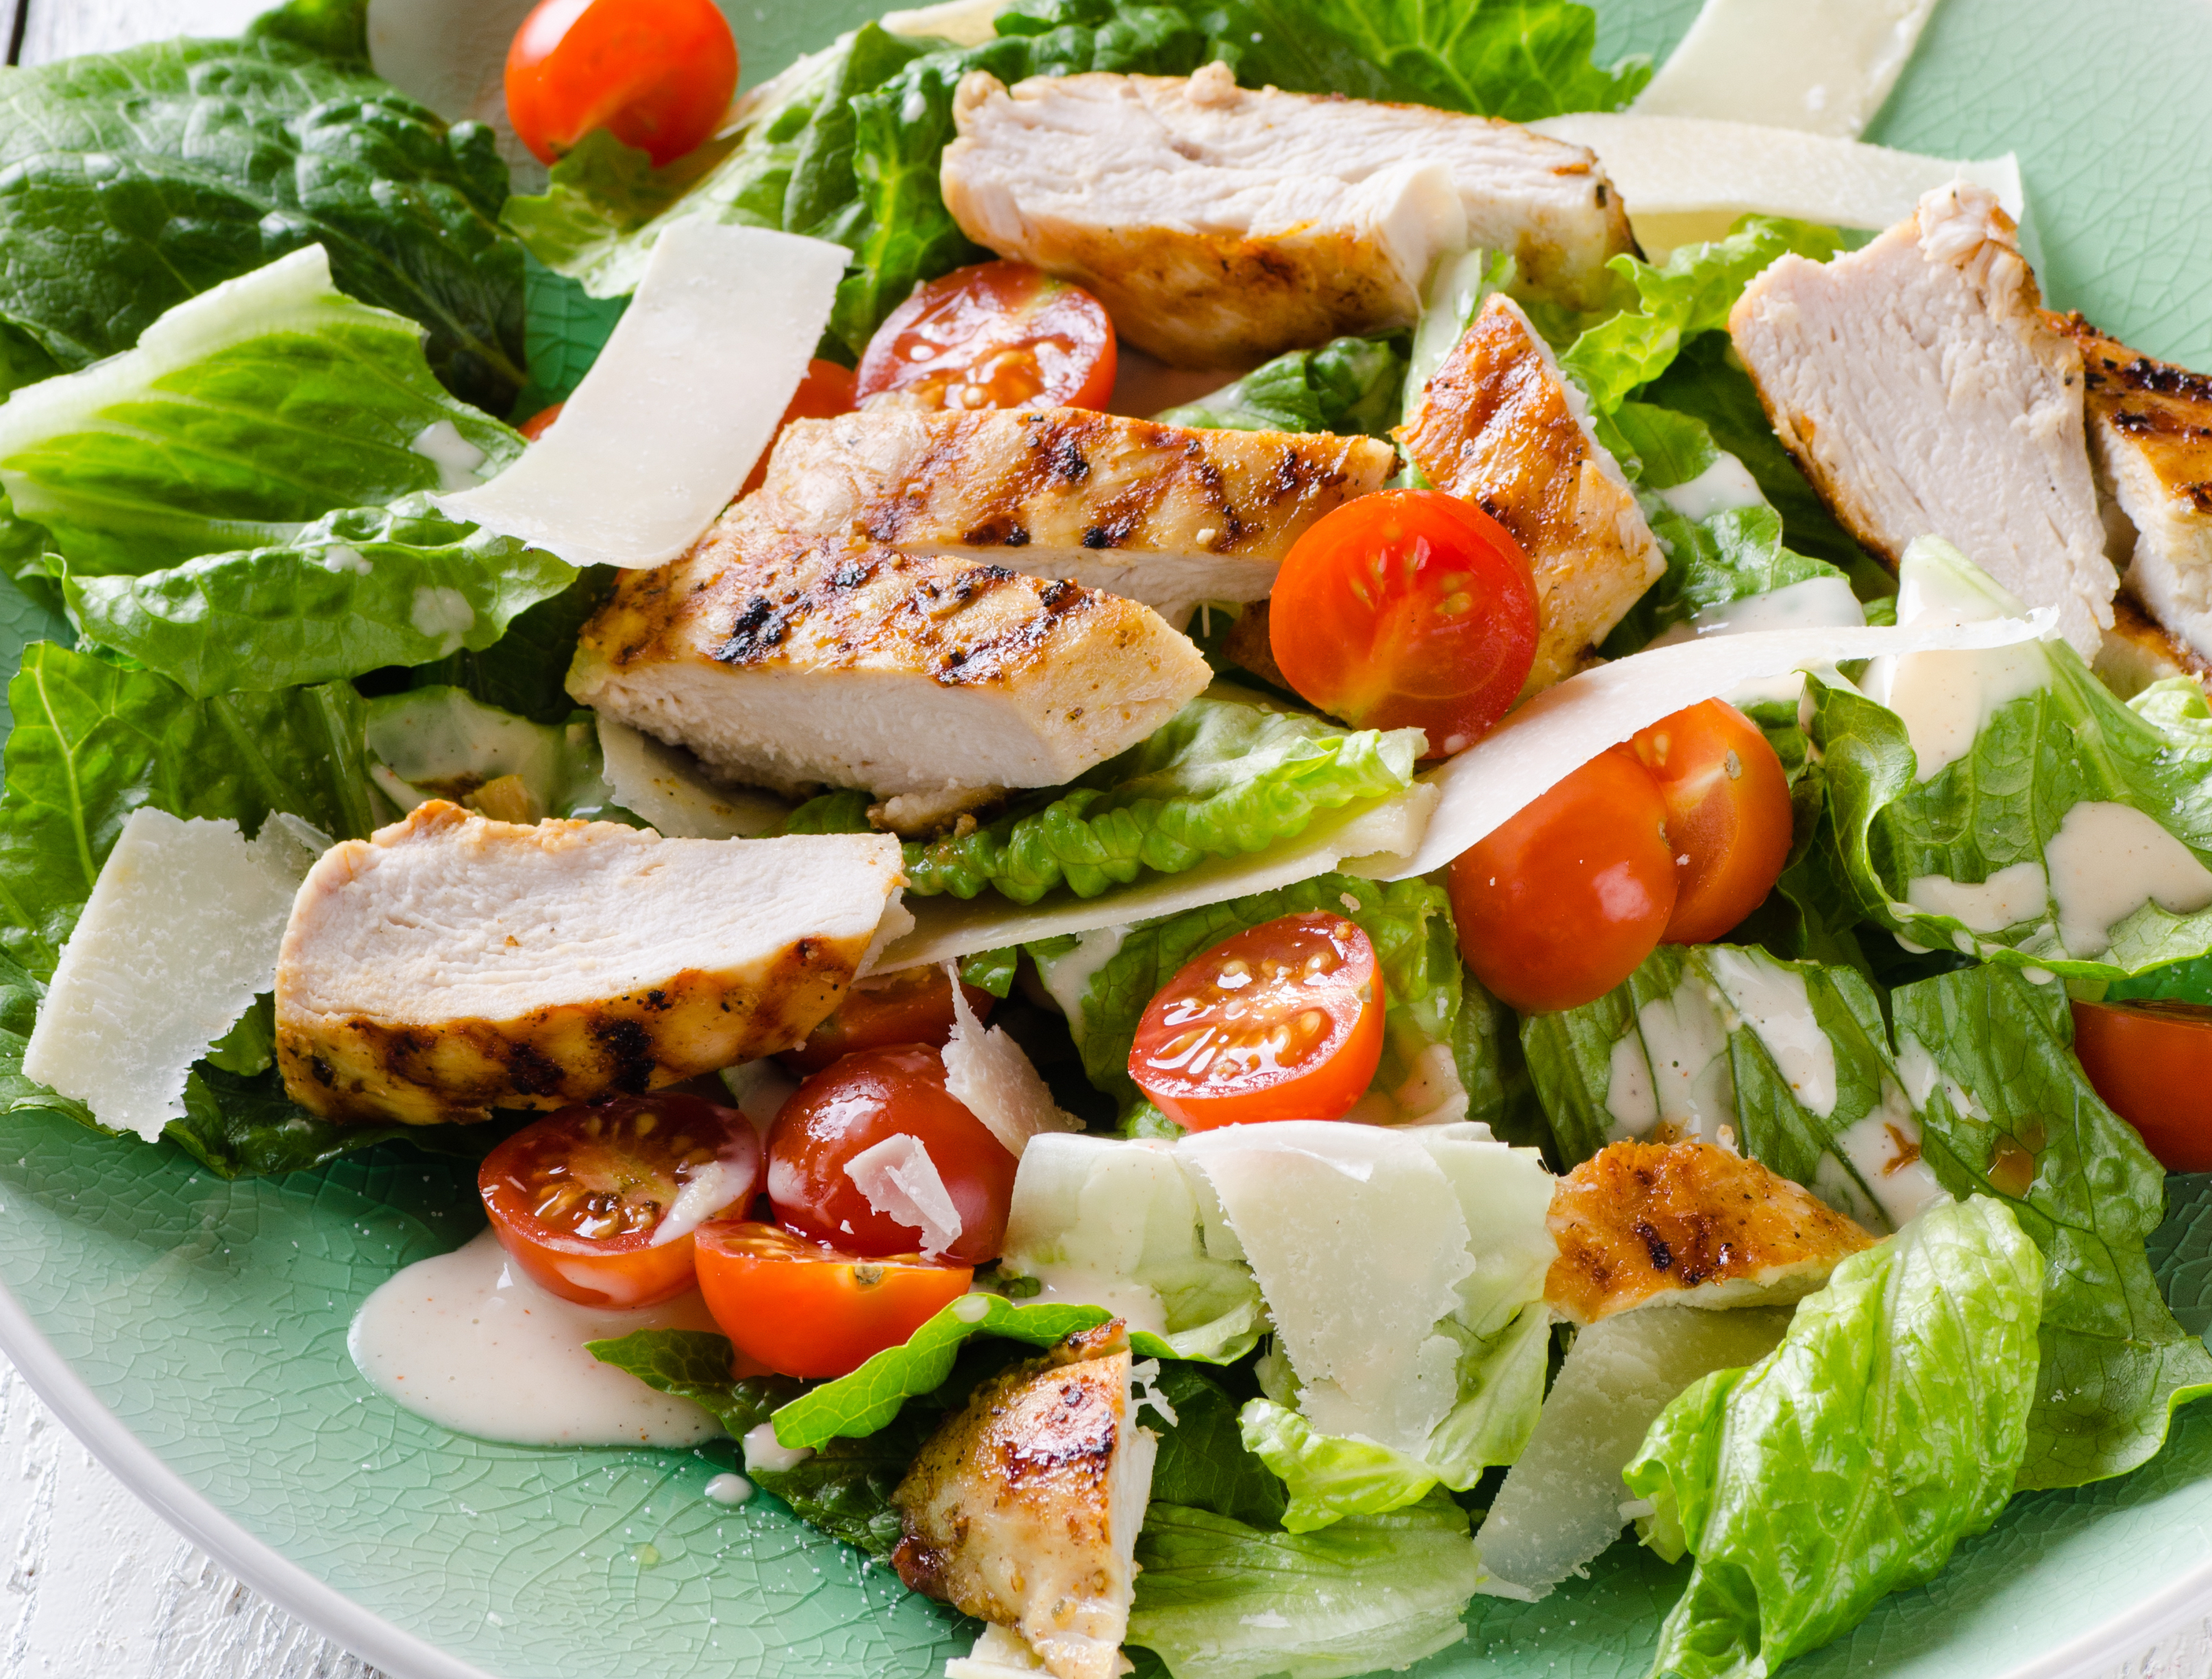 Tiana Fairtrade Organics Chicken Salad with MCT Recipe